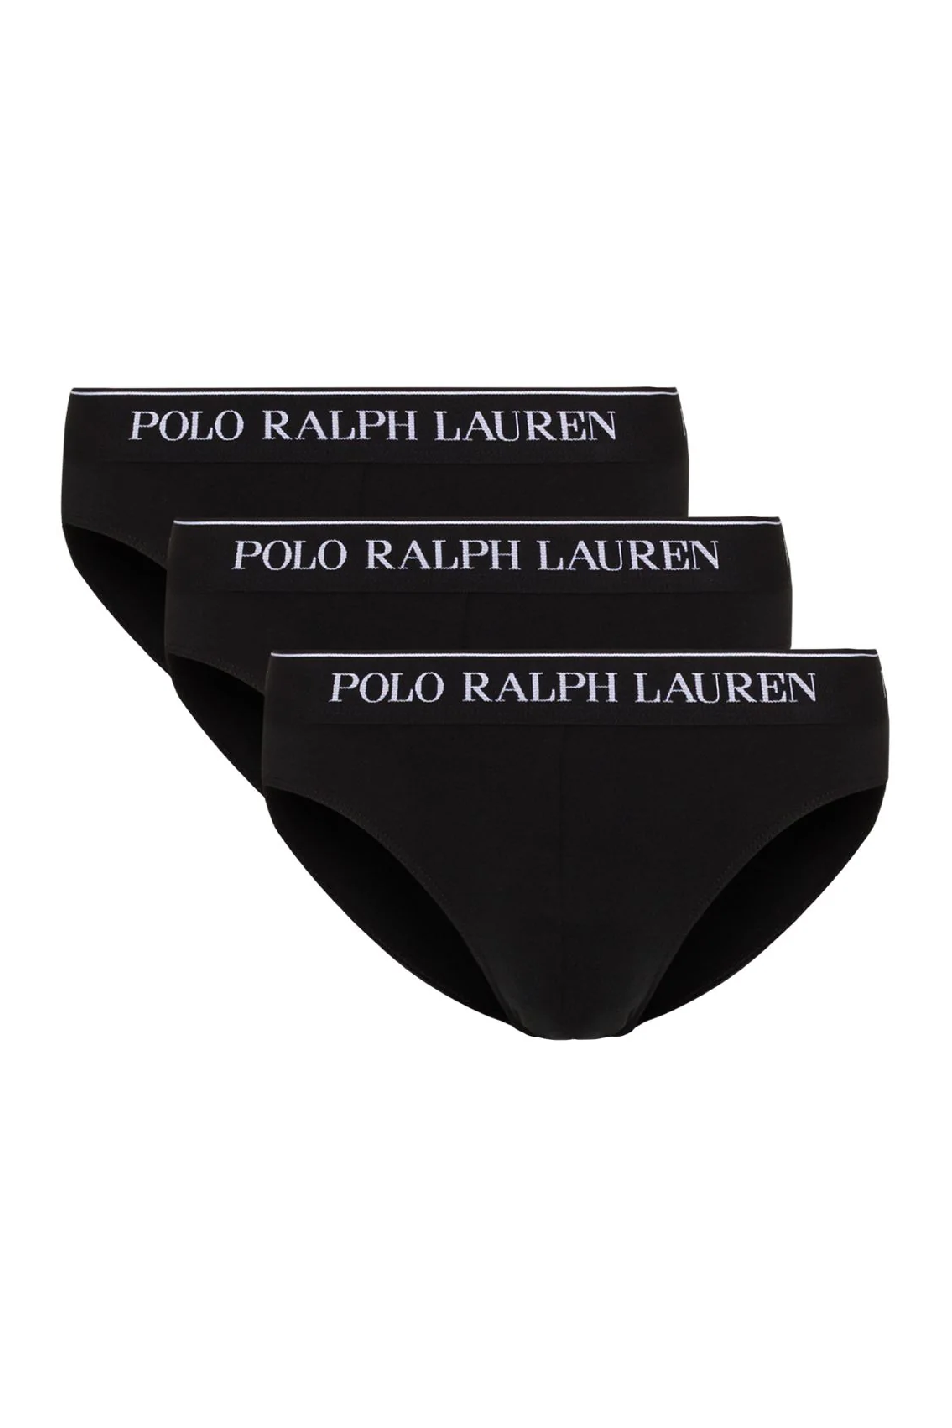 Polo Ralph Lauren 3 Pack Men's Briefs